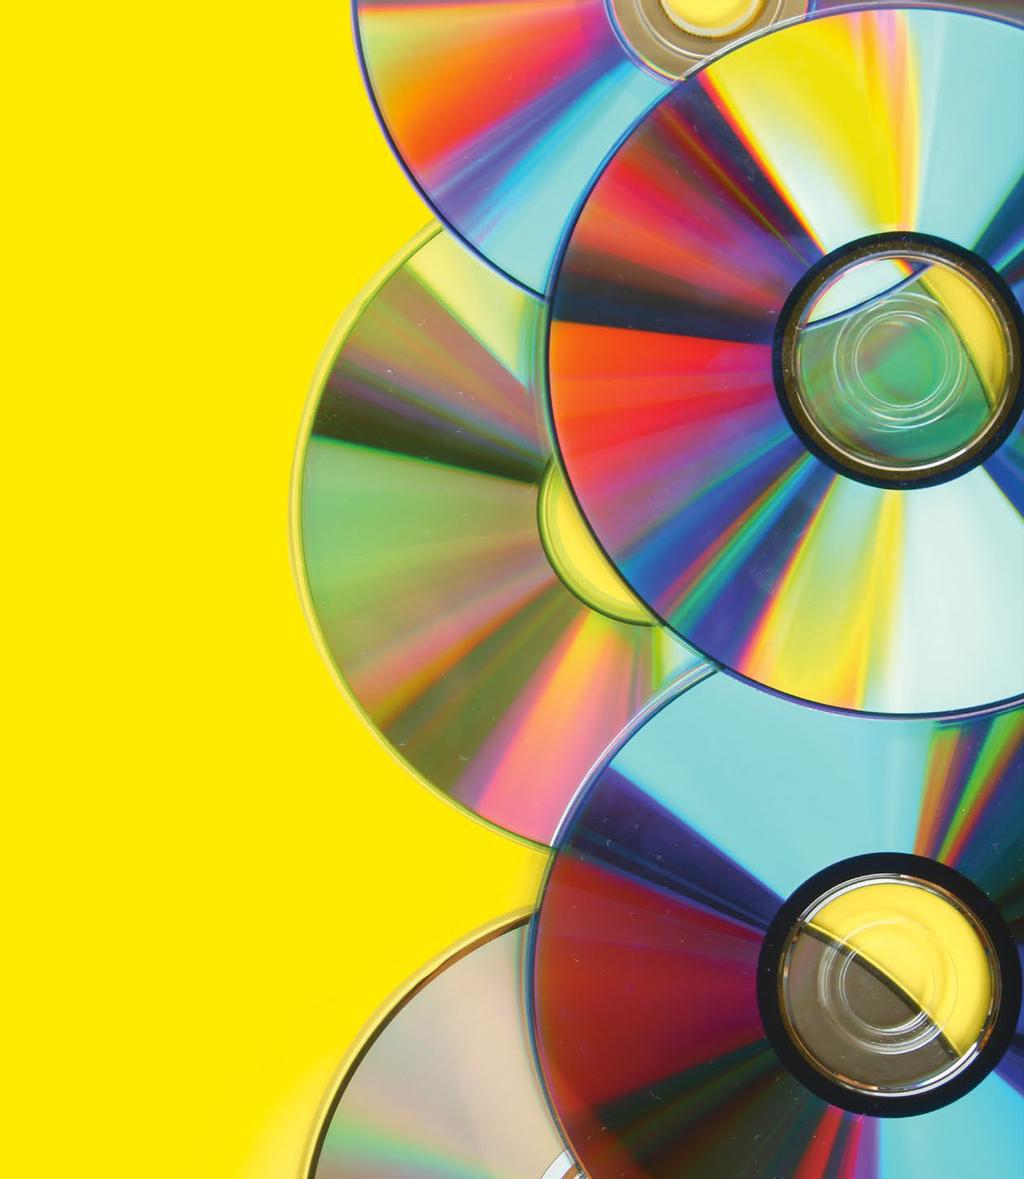 Don’t bin your CDs